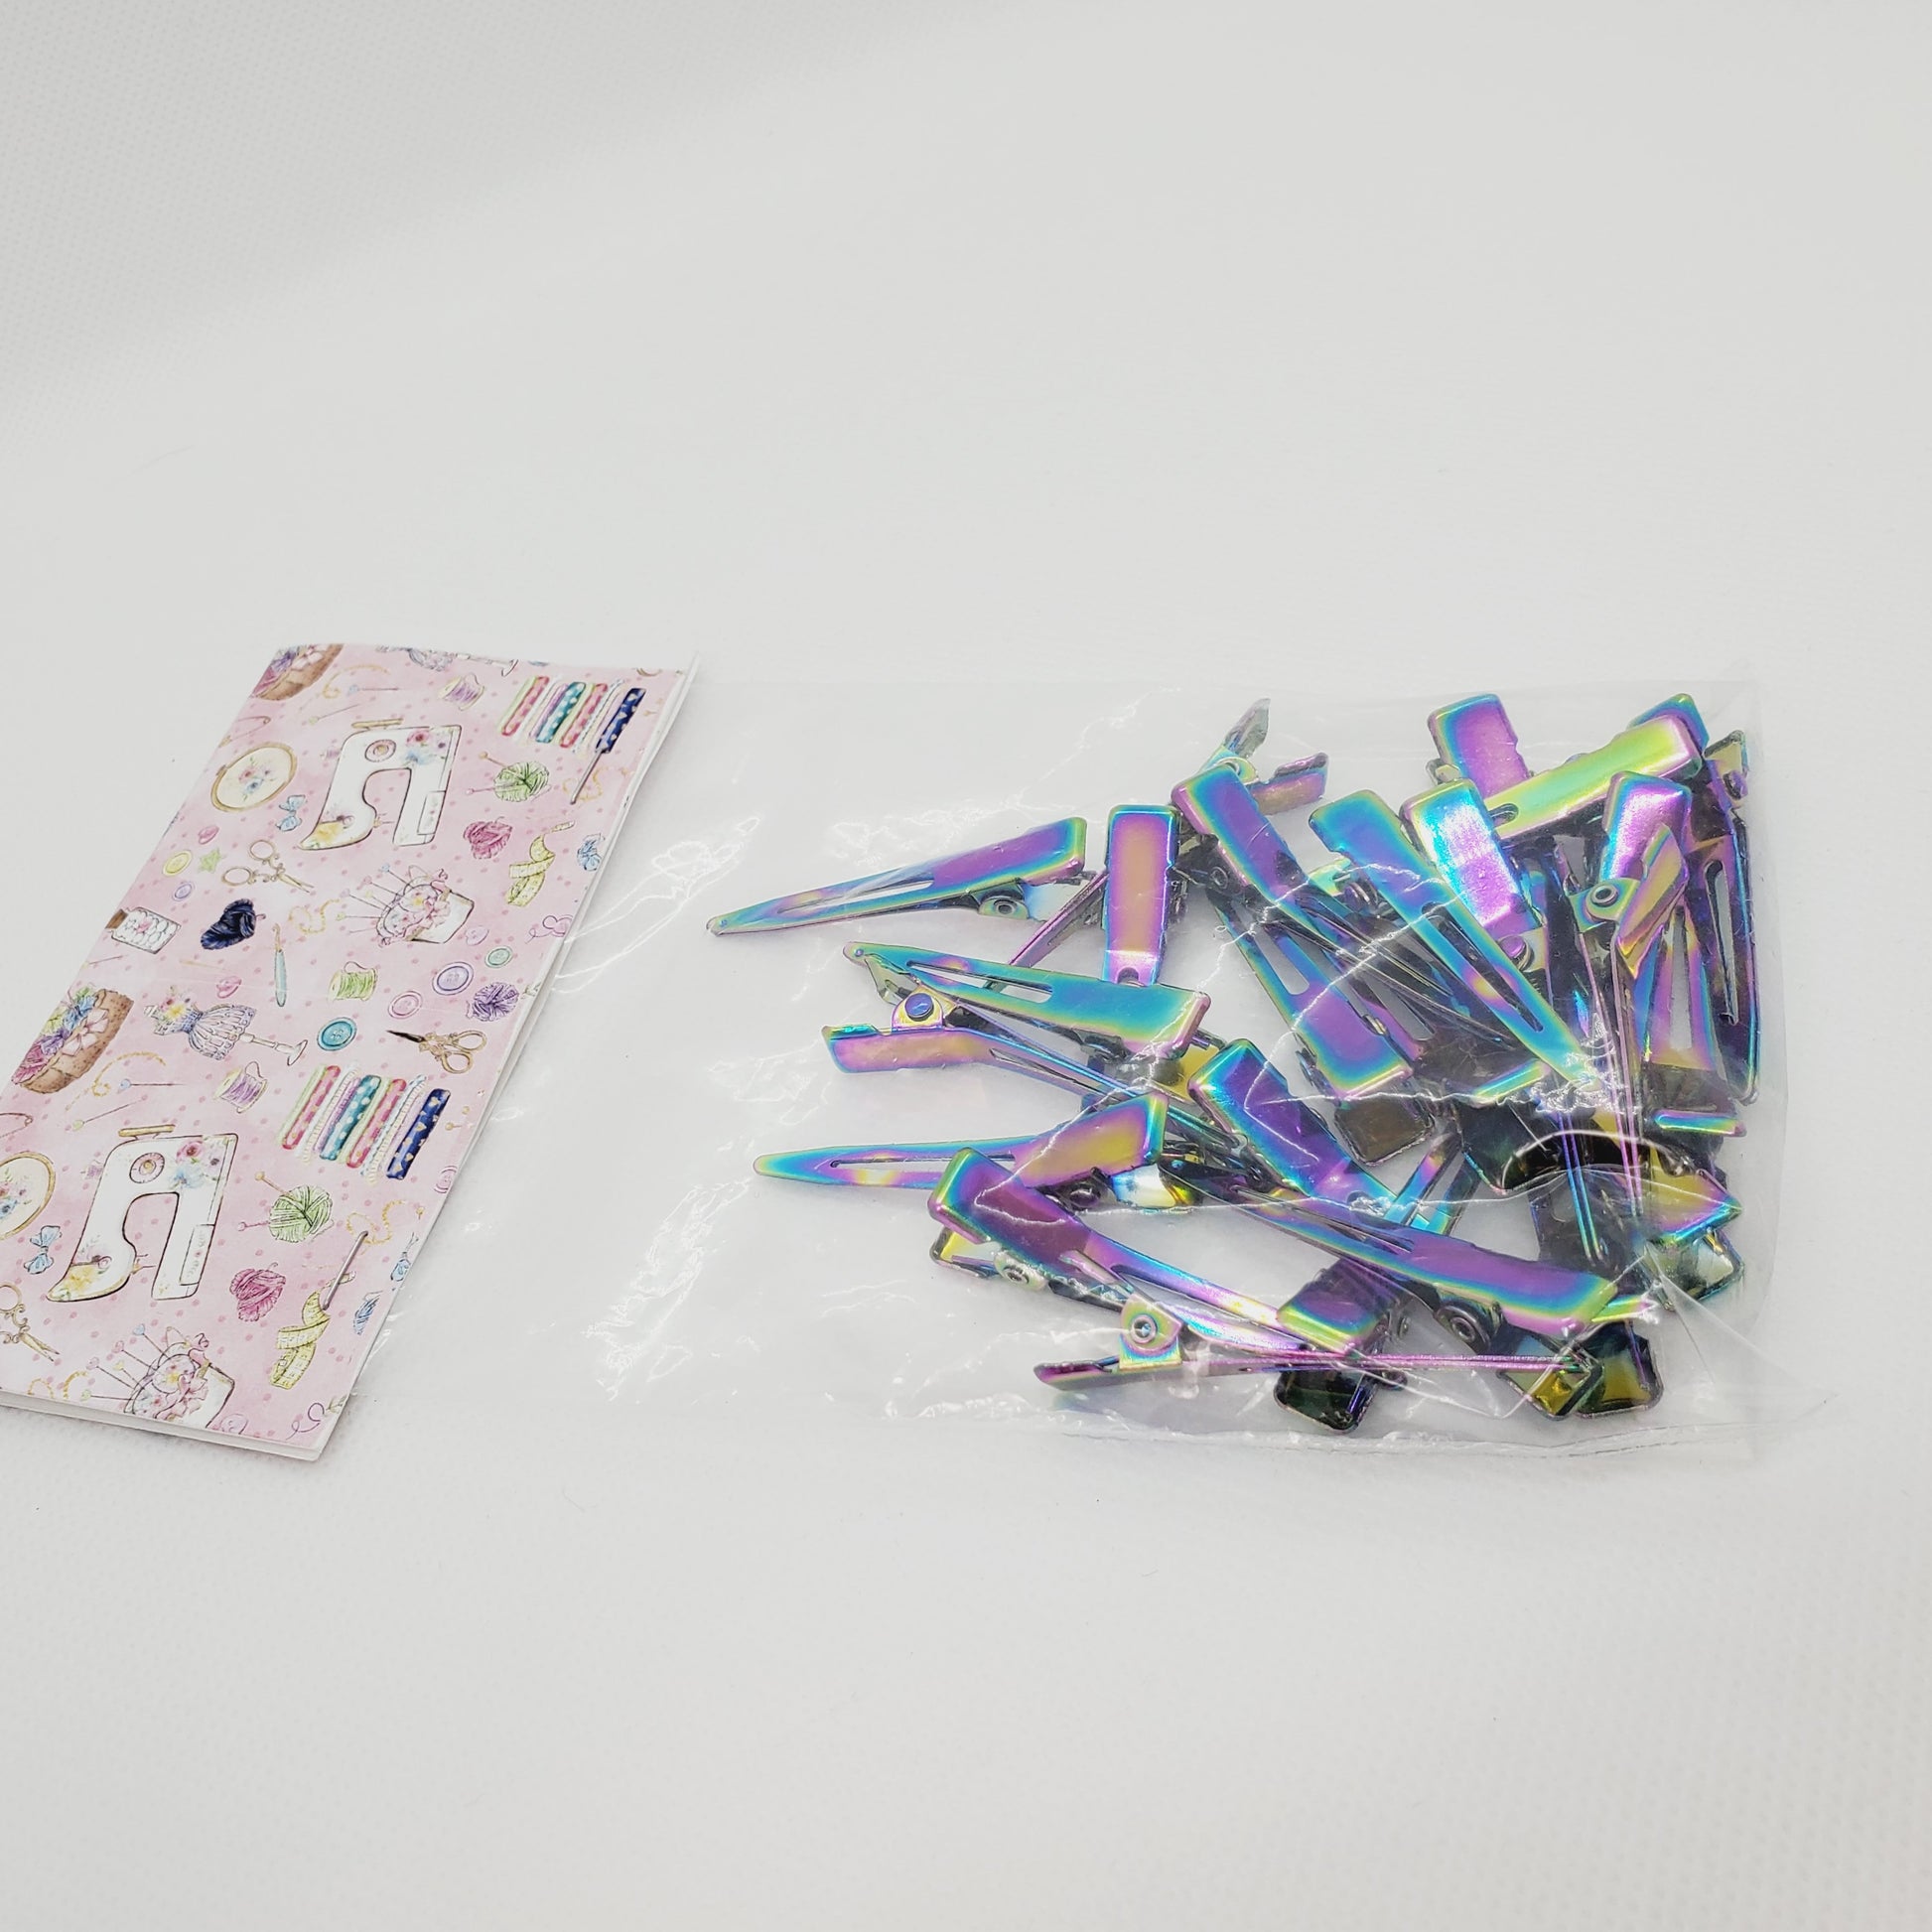 Mini Sewing clips, 25pc rainbow colors – KarensHobbyRoom